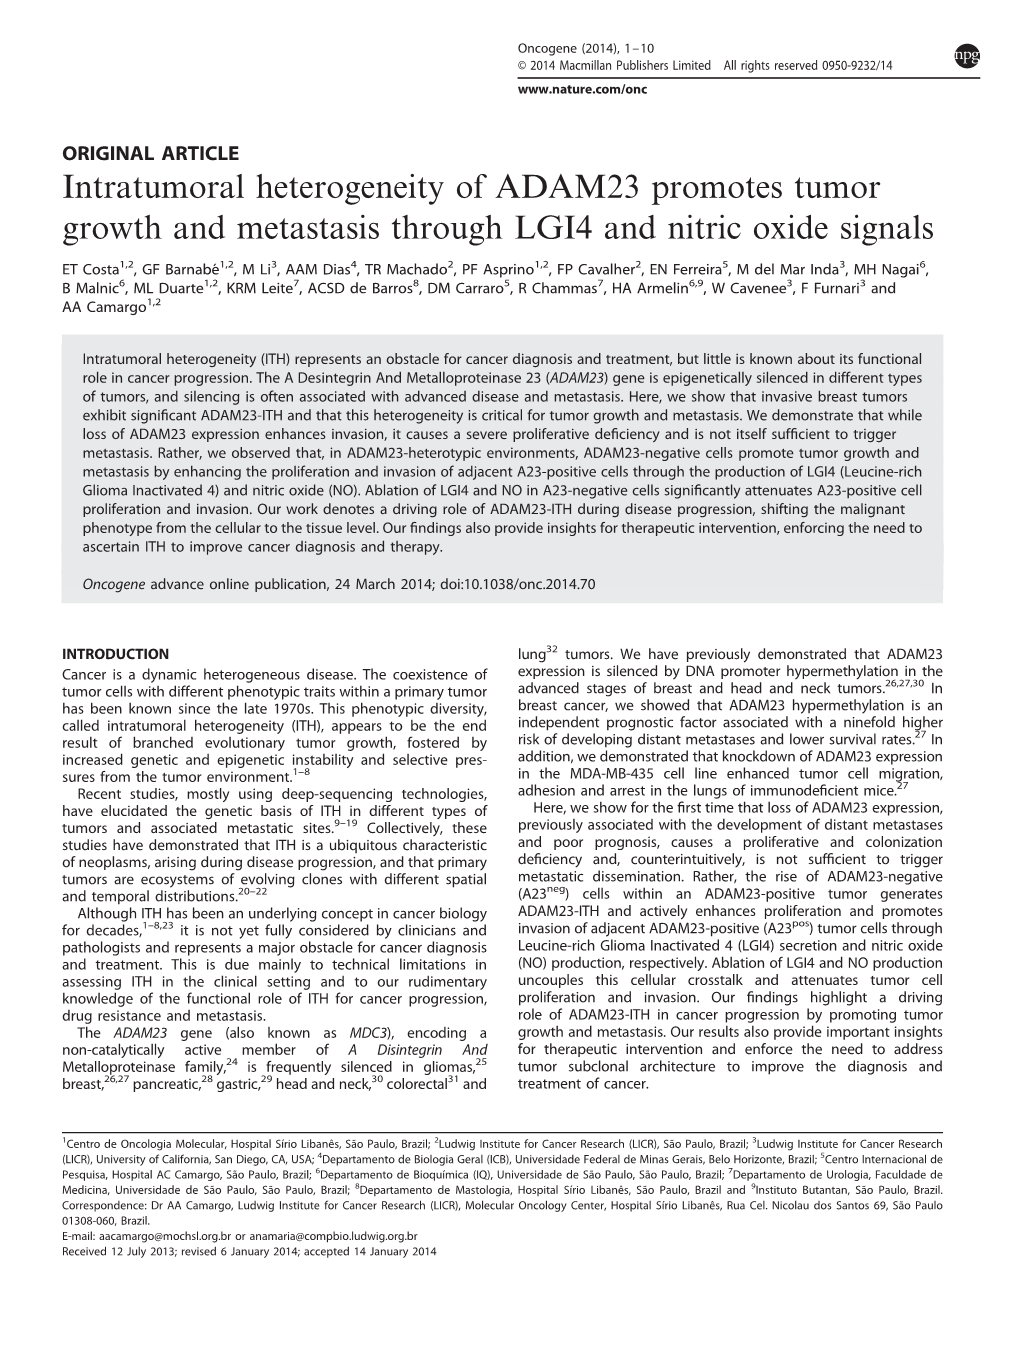 Intratumoral Heterogeneity of ADAM23 Promotes Tumor Growth and Metastasis Through LGI4 and Nitric Oxide Signals